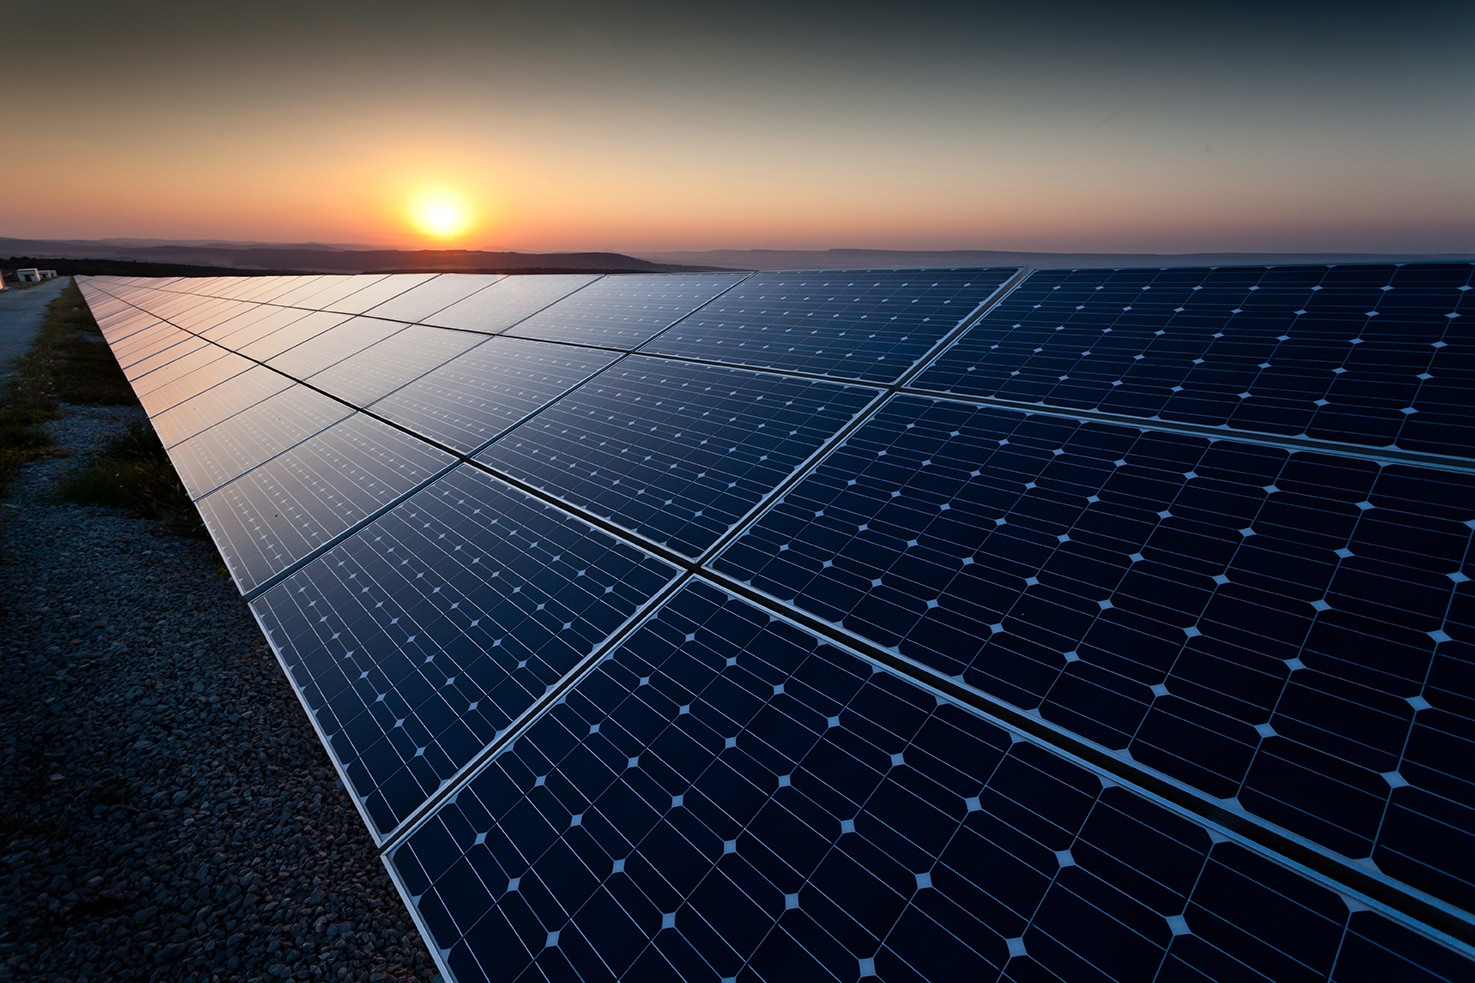 Image of solar panels at dusk for Energy Technology blog post